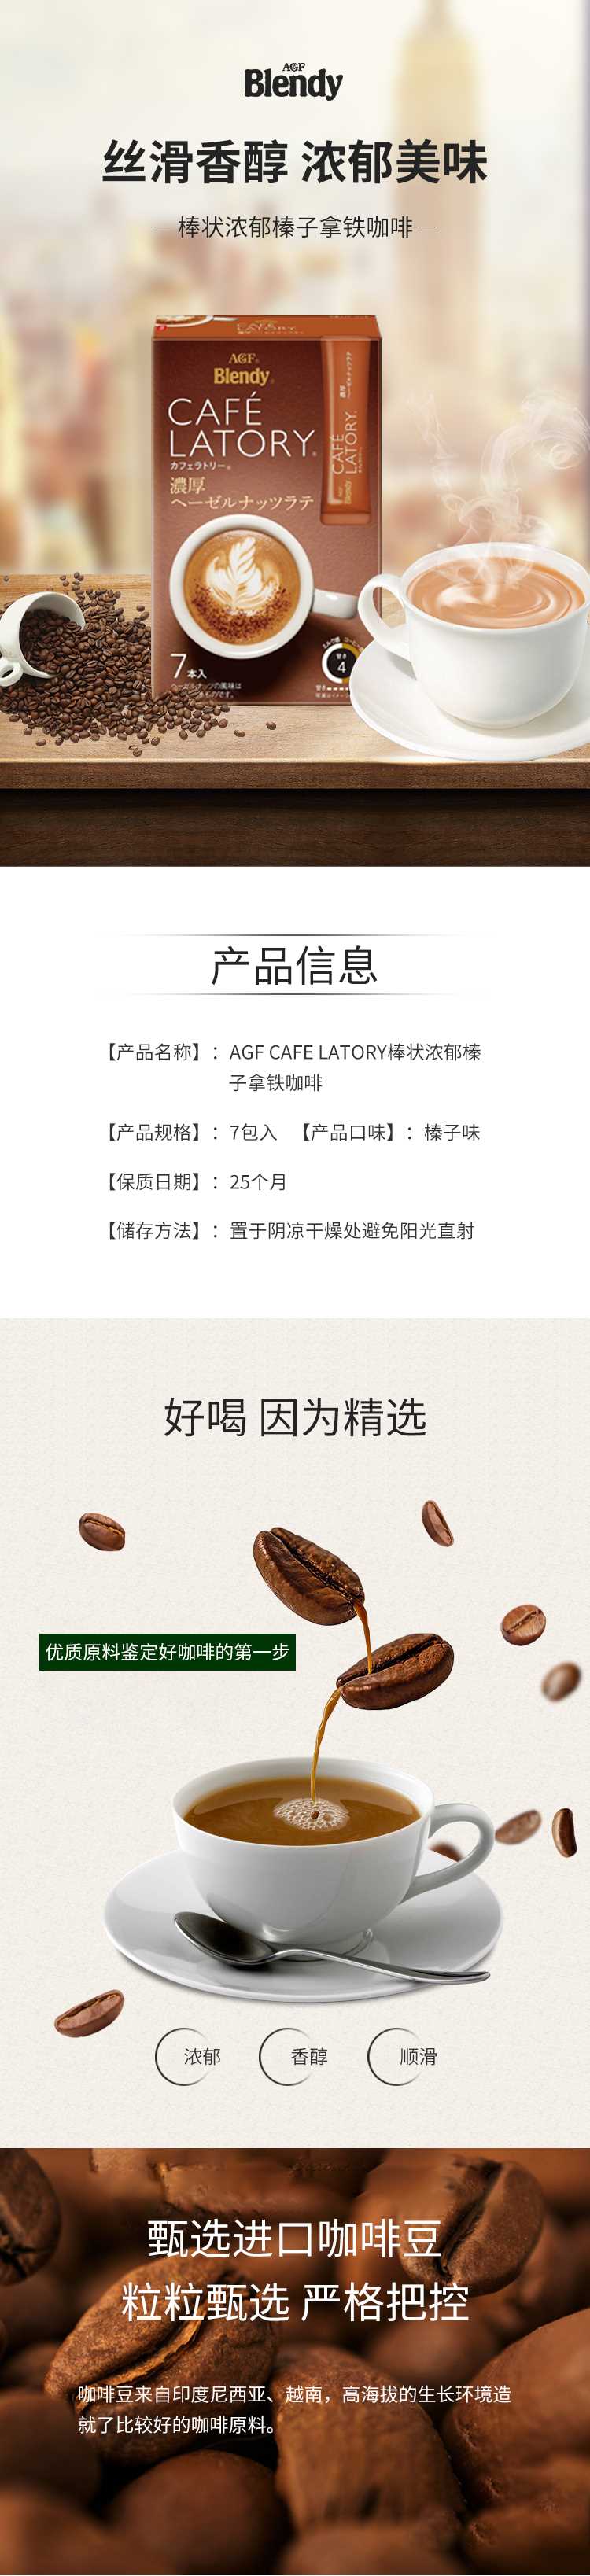 AGF-CAFE-LATORY棒状浓郁榛子拿铁咖啡7包入_01.jpg